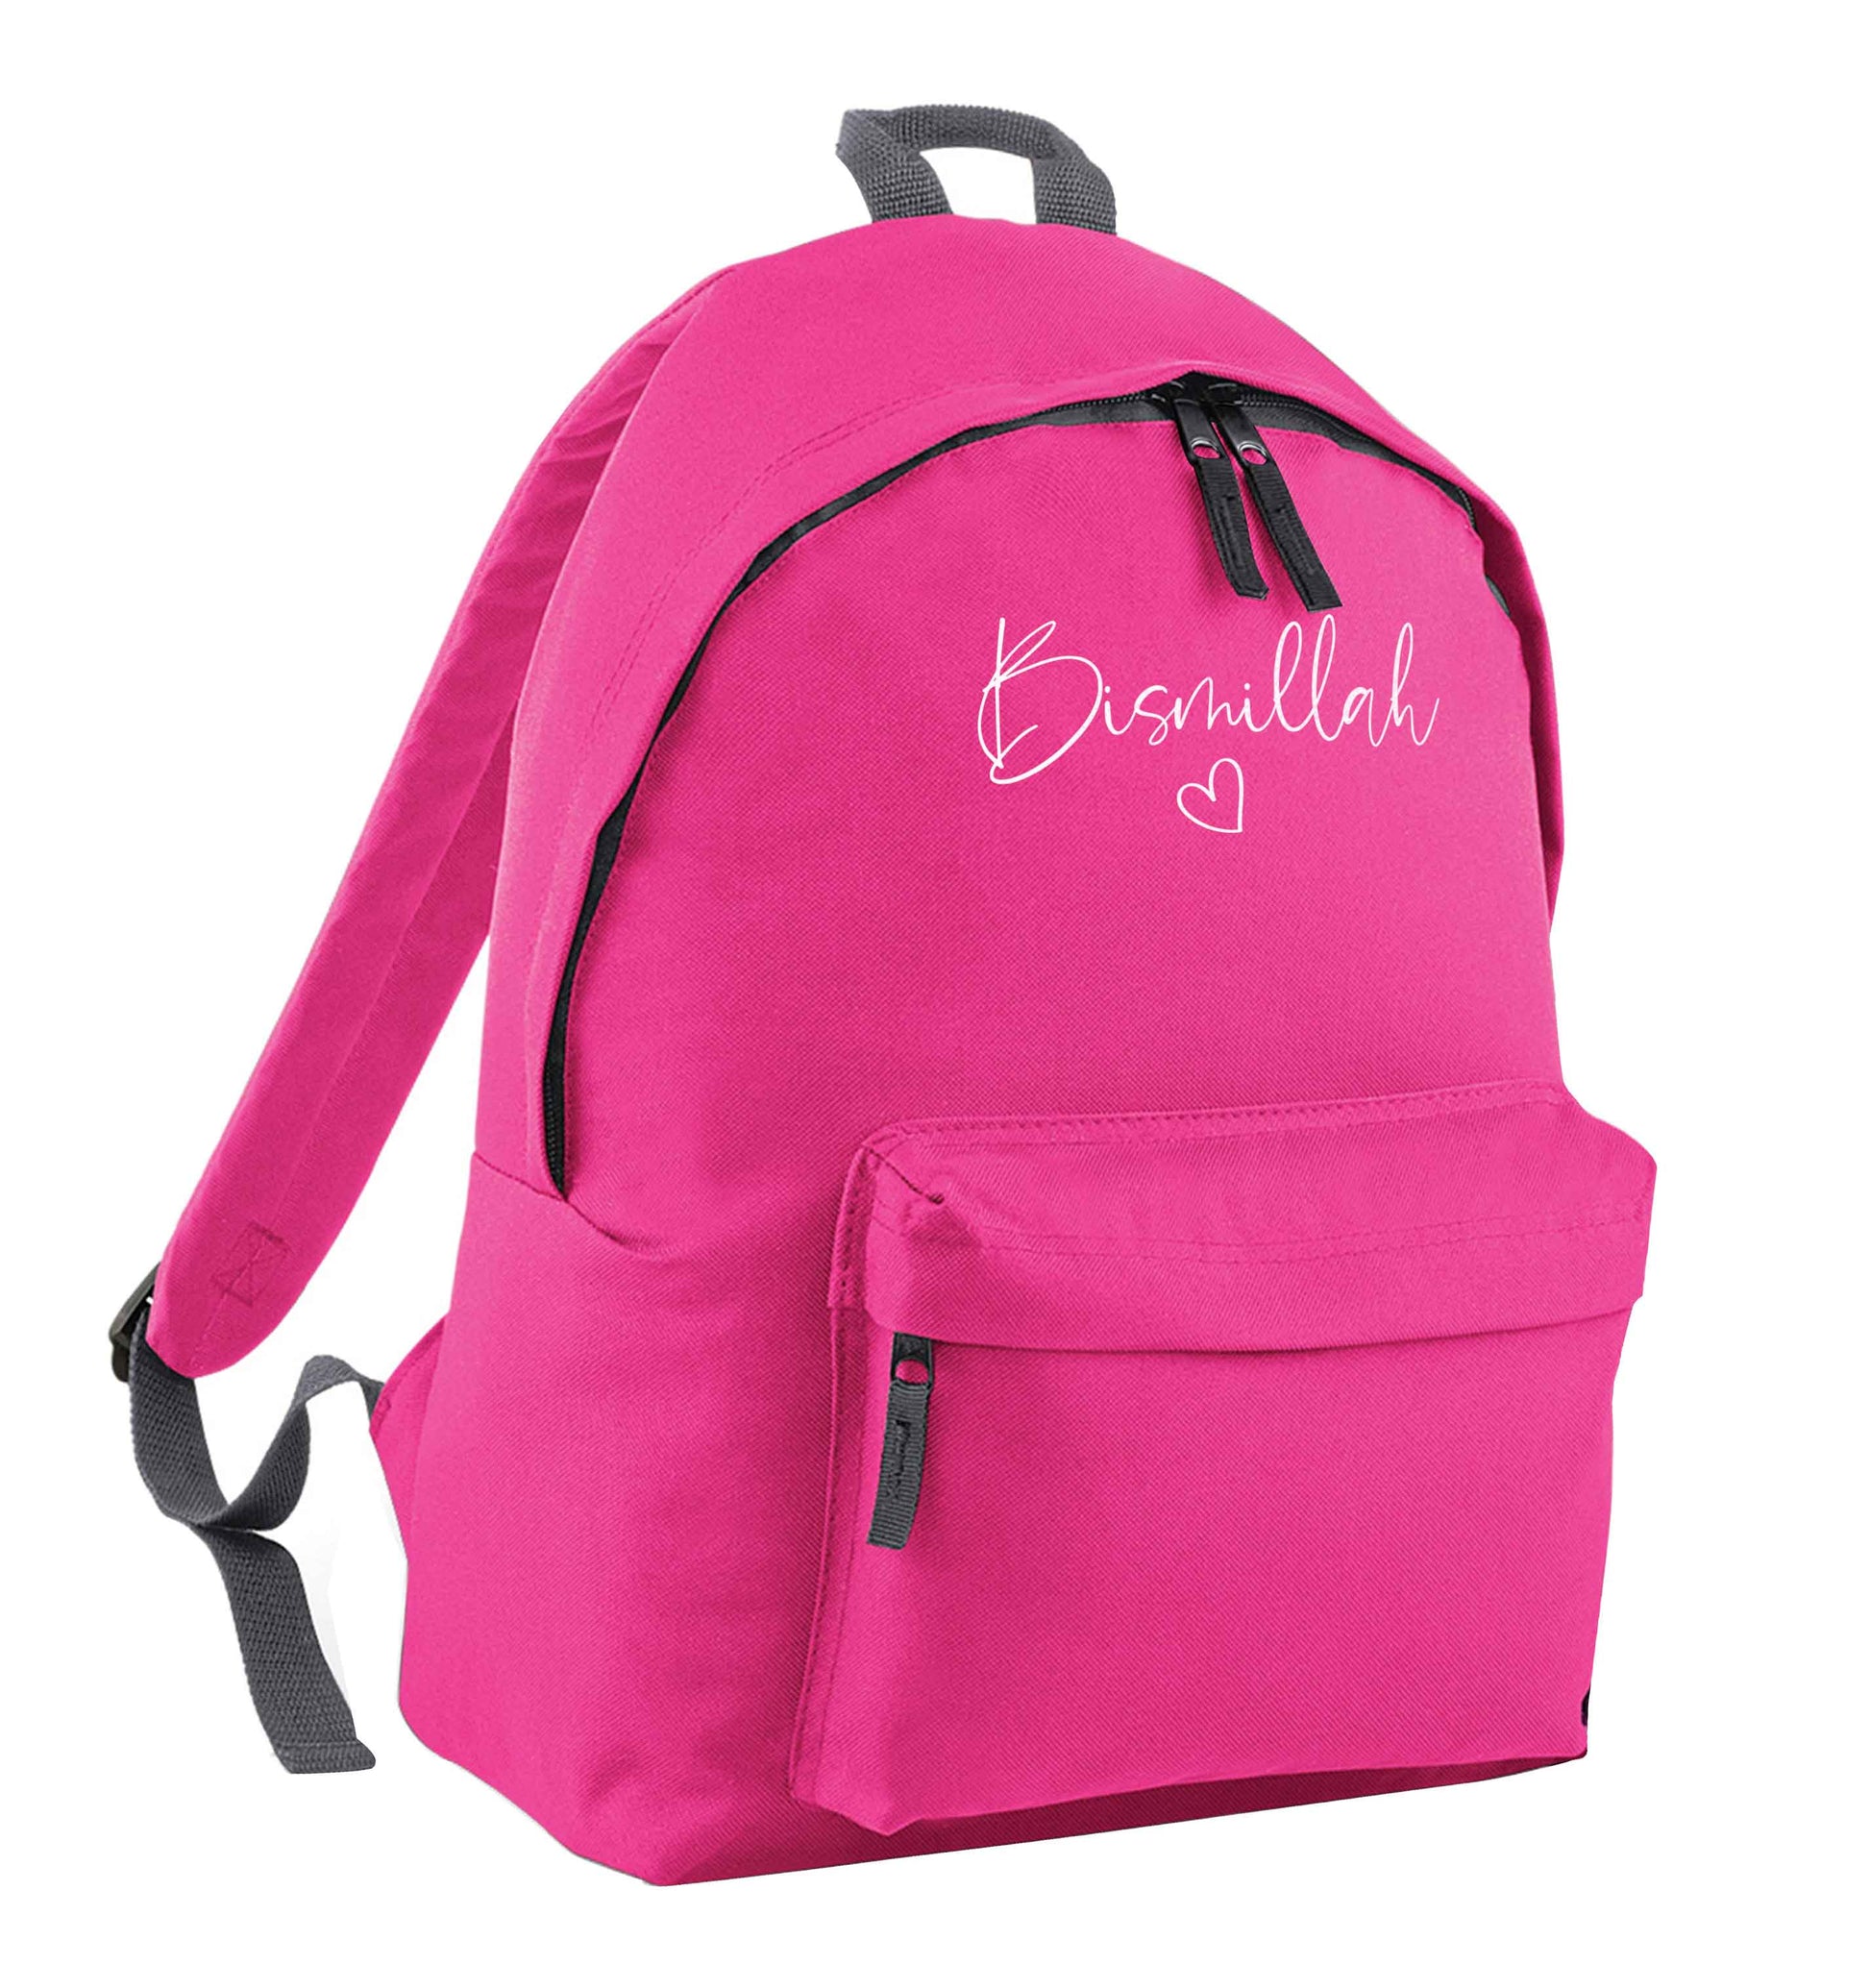 Bismillah pink adults backpack